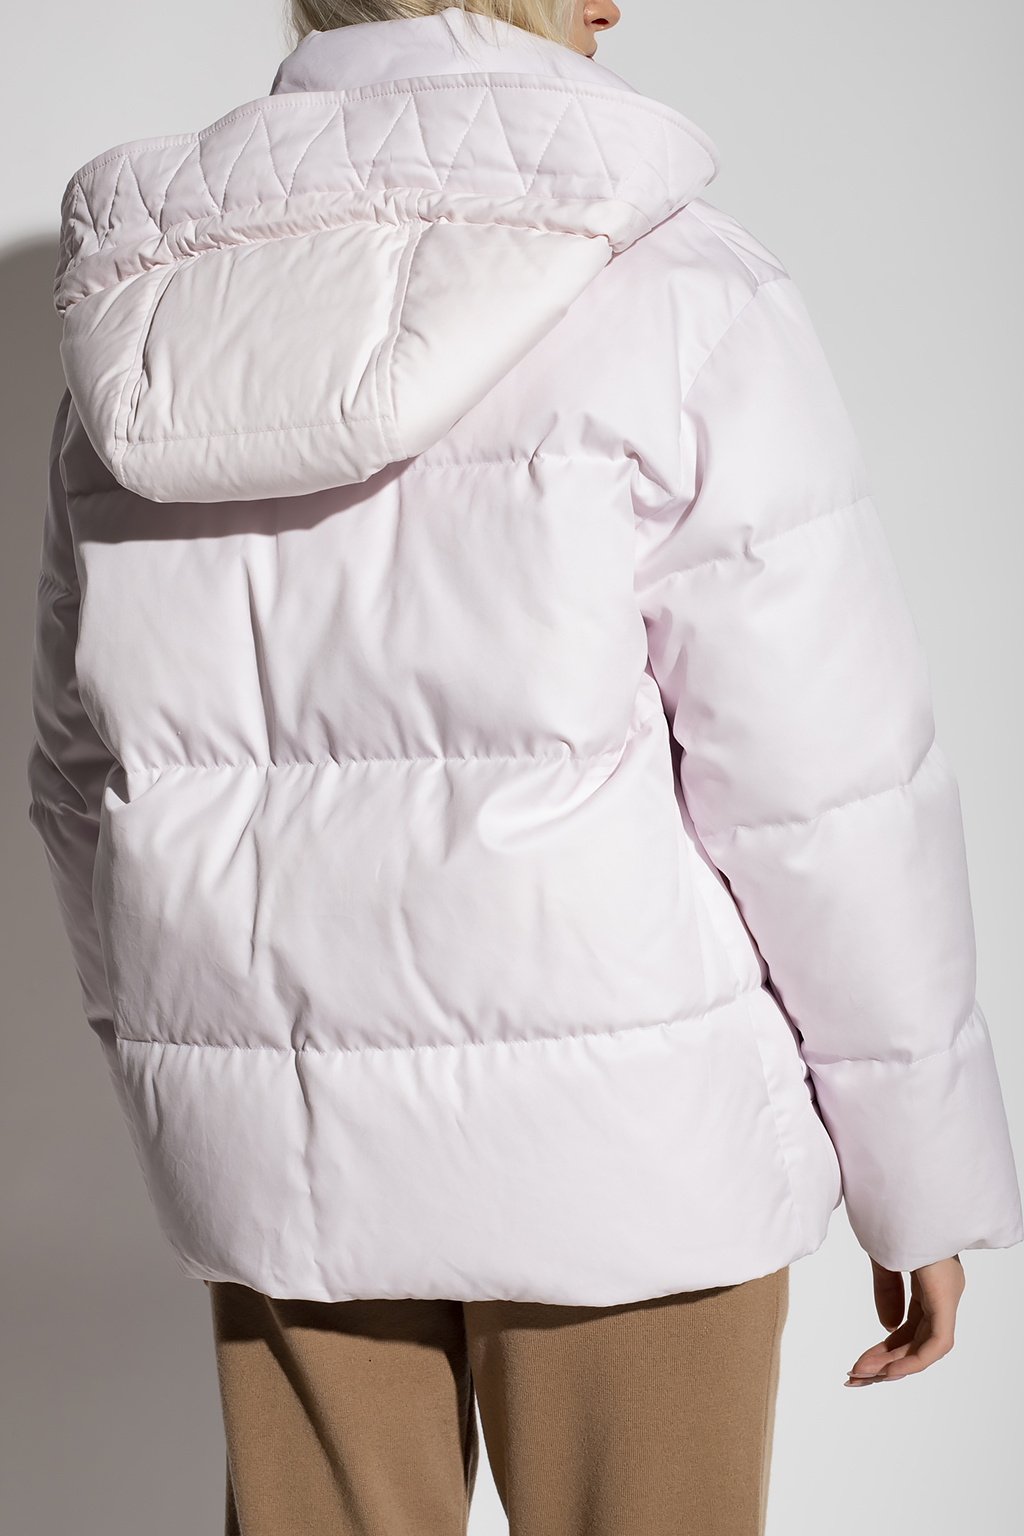 Burberry ‘Denston’ jacket with detachable hood